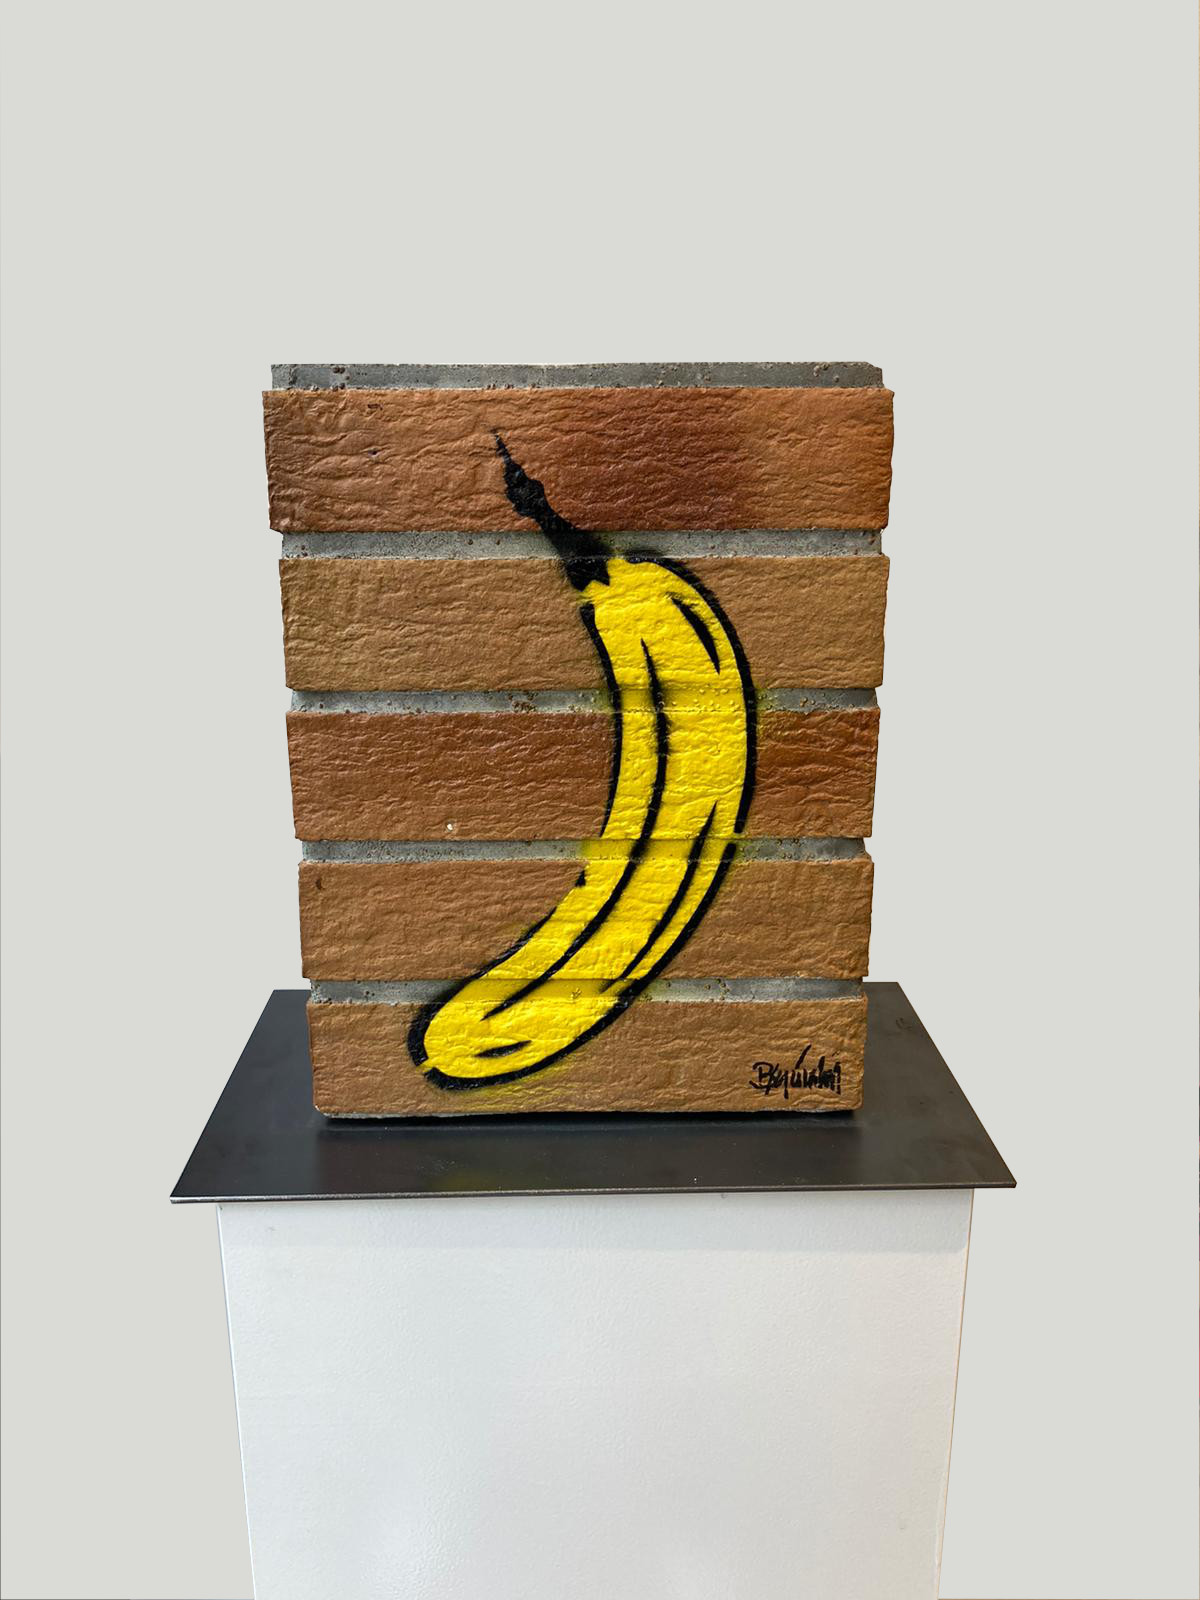 Thomas Baumgaertel – Bananenmauer